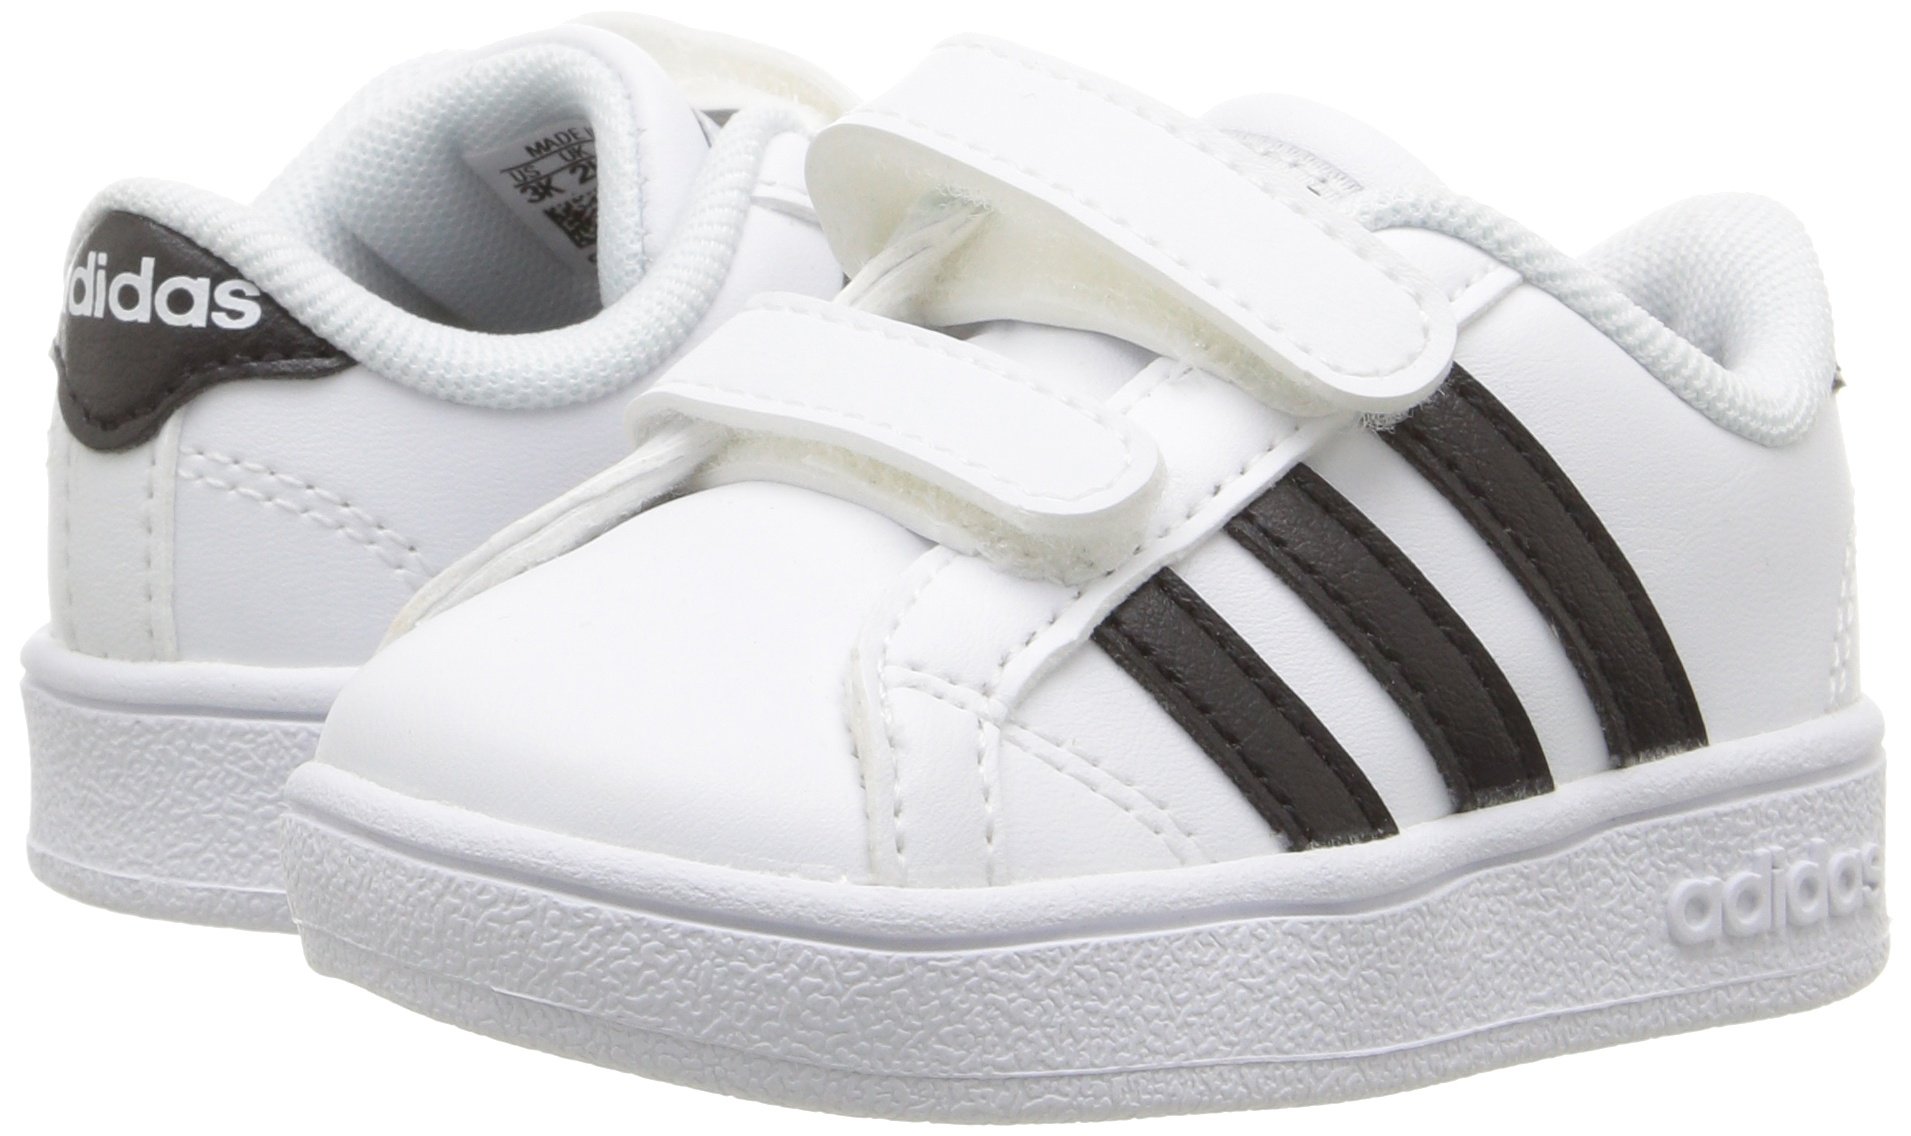 adidas Unisex-Child Toddler Baseline Shoes Sneaker